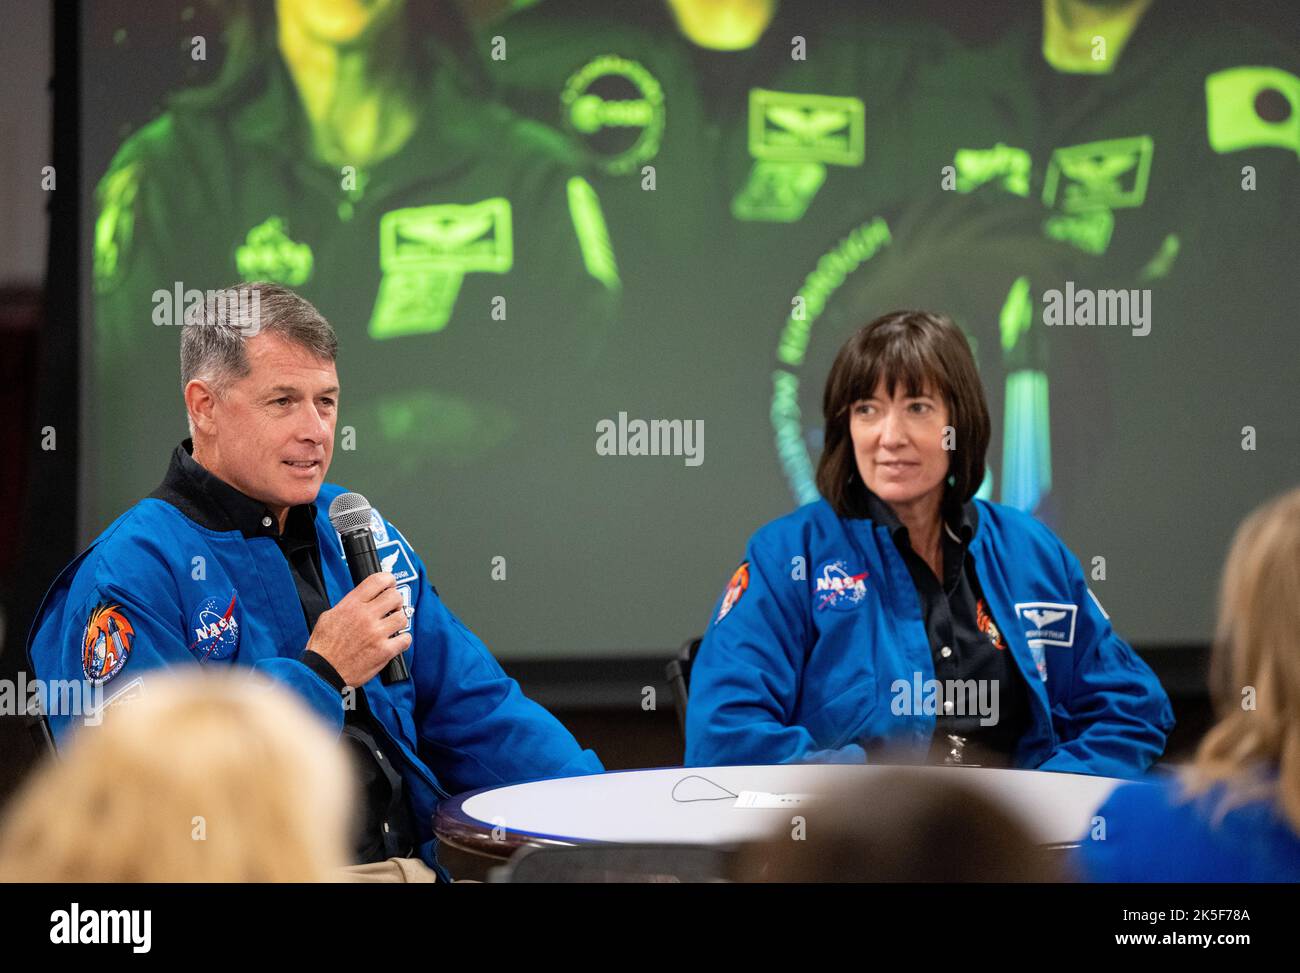 Nasas Spacex Crew 2 Astronauts Shane Kimbrough Left And Megan